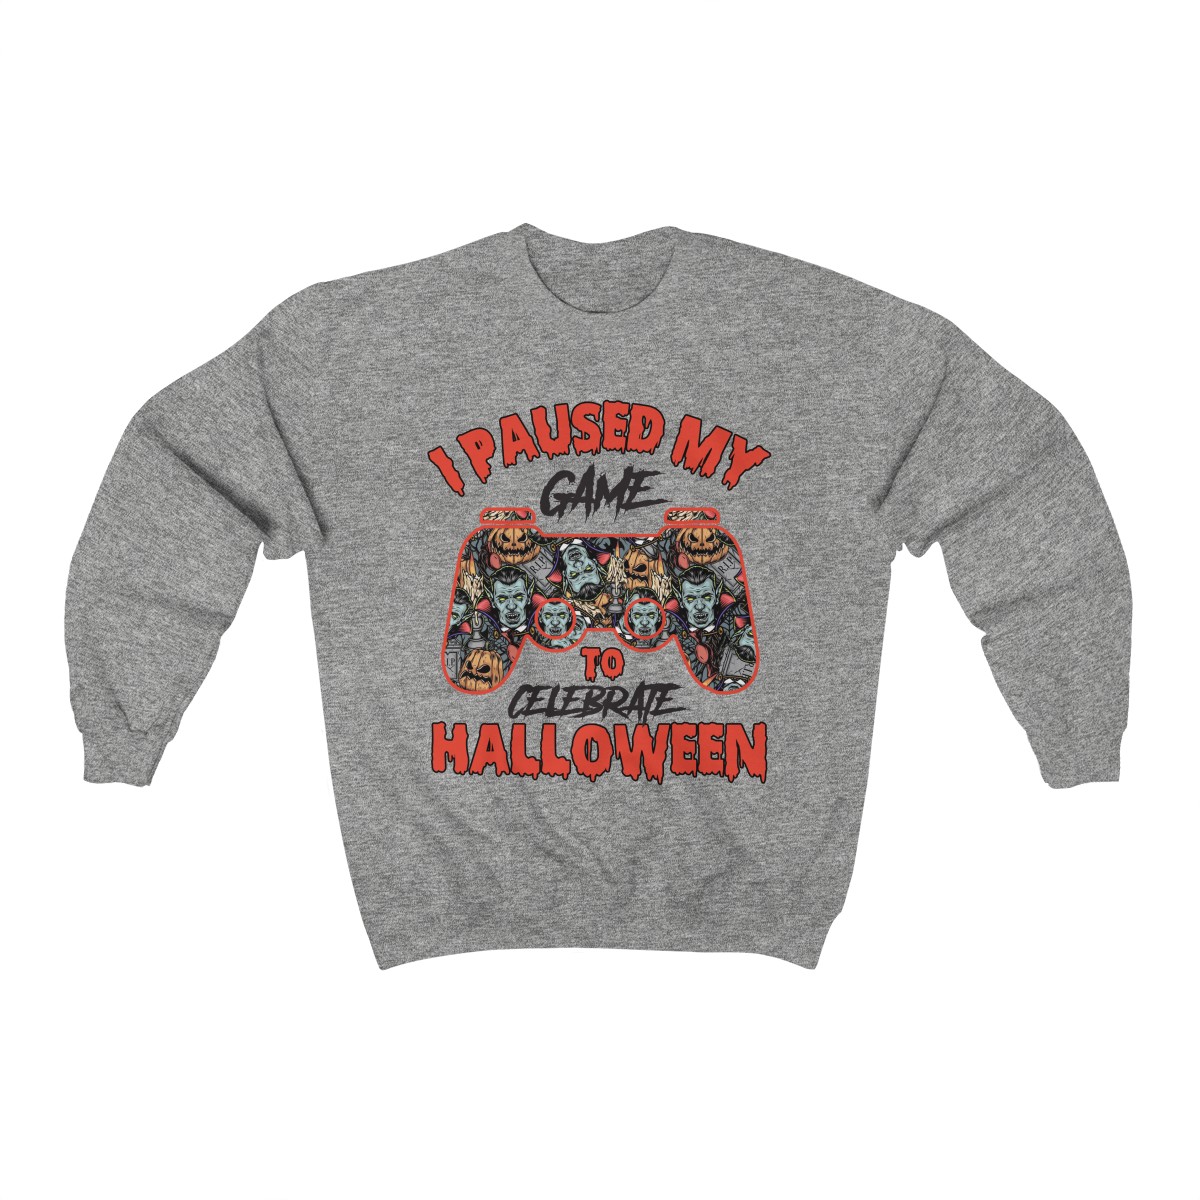 I Paused My Game To Celebrate Halloween Unisex T-Shirt, Sweatshirt, Hoodie